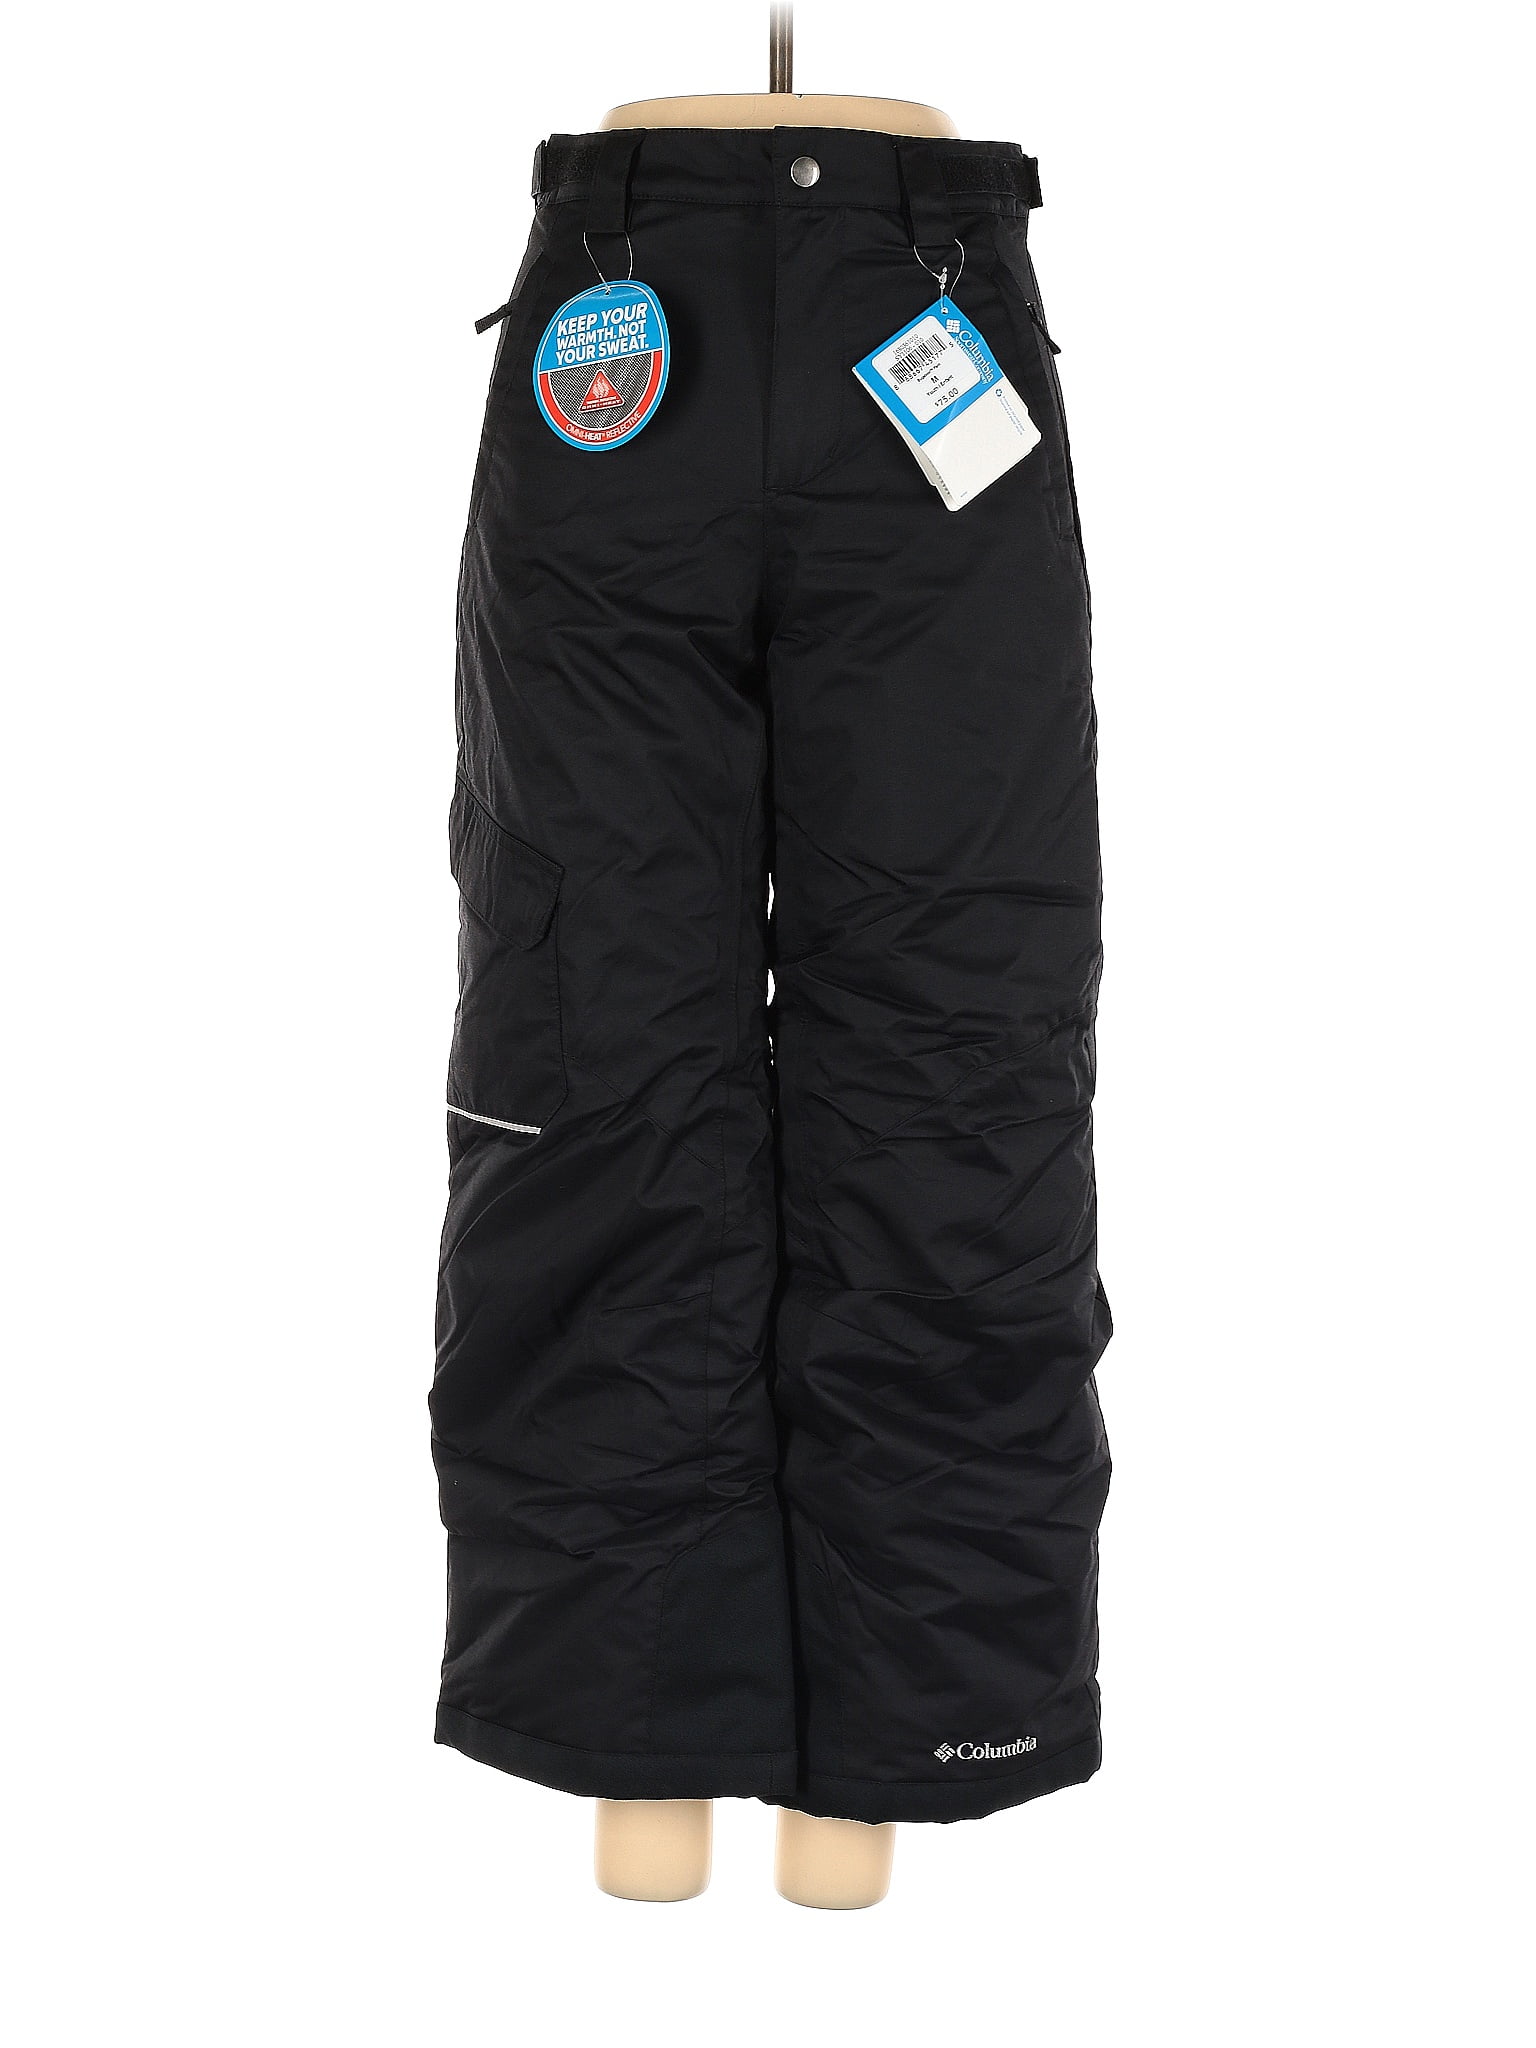 Columbia 100% Nylon Solid Black Snow Pants Size M - 75% off